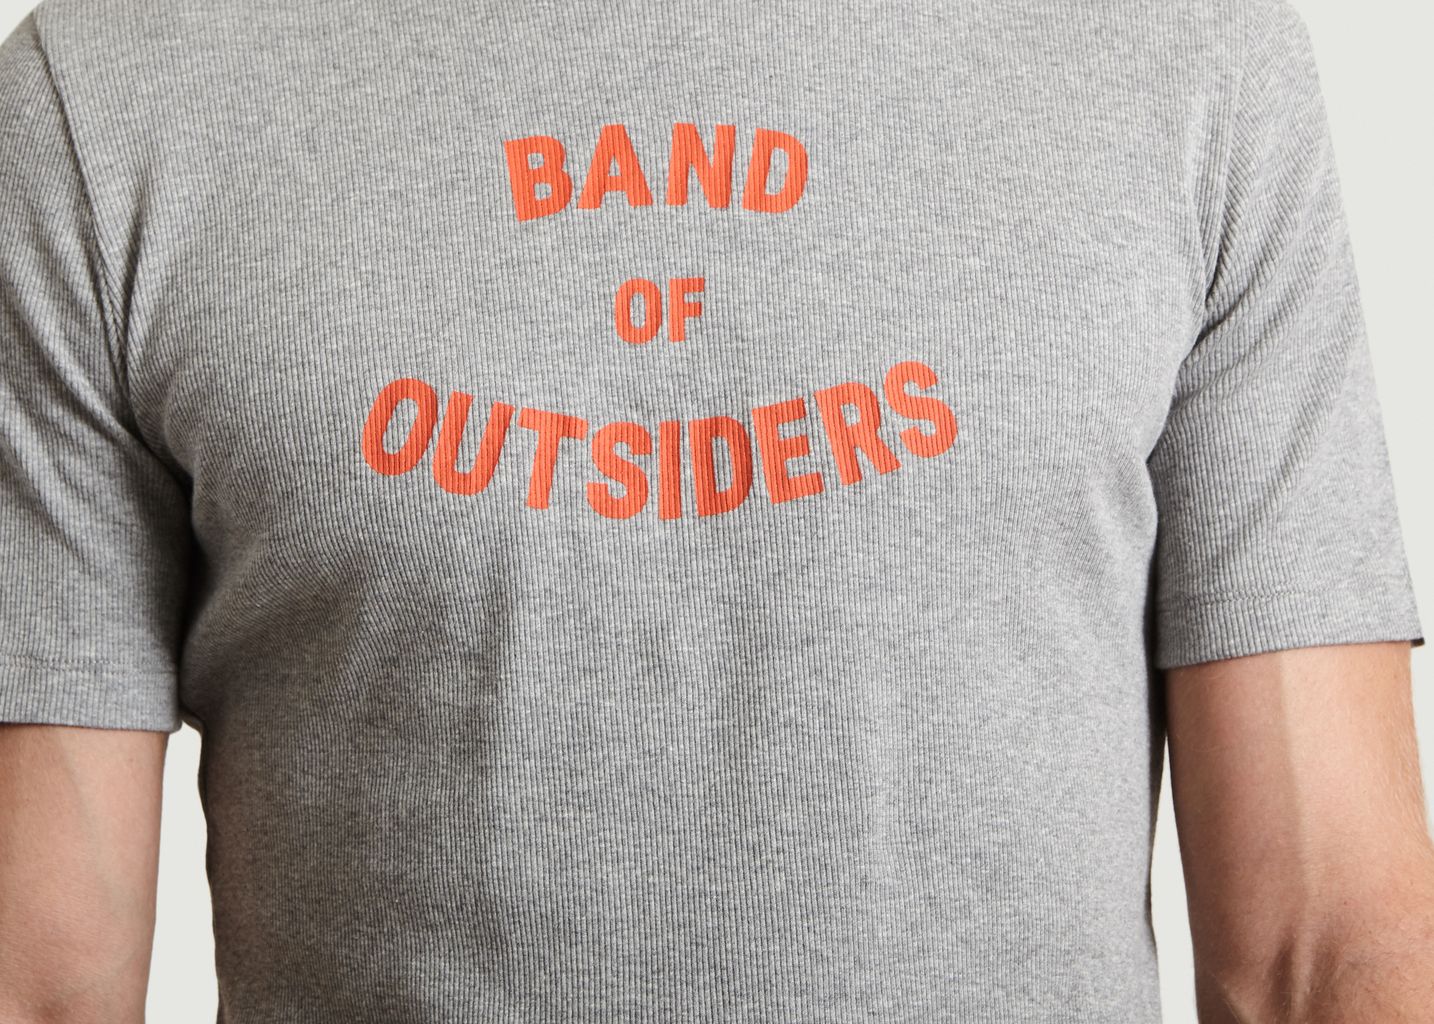 Logo Print T-Shirt - Band Of Outsiders